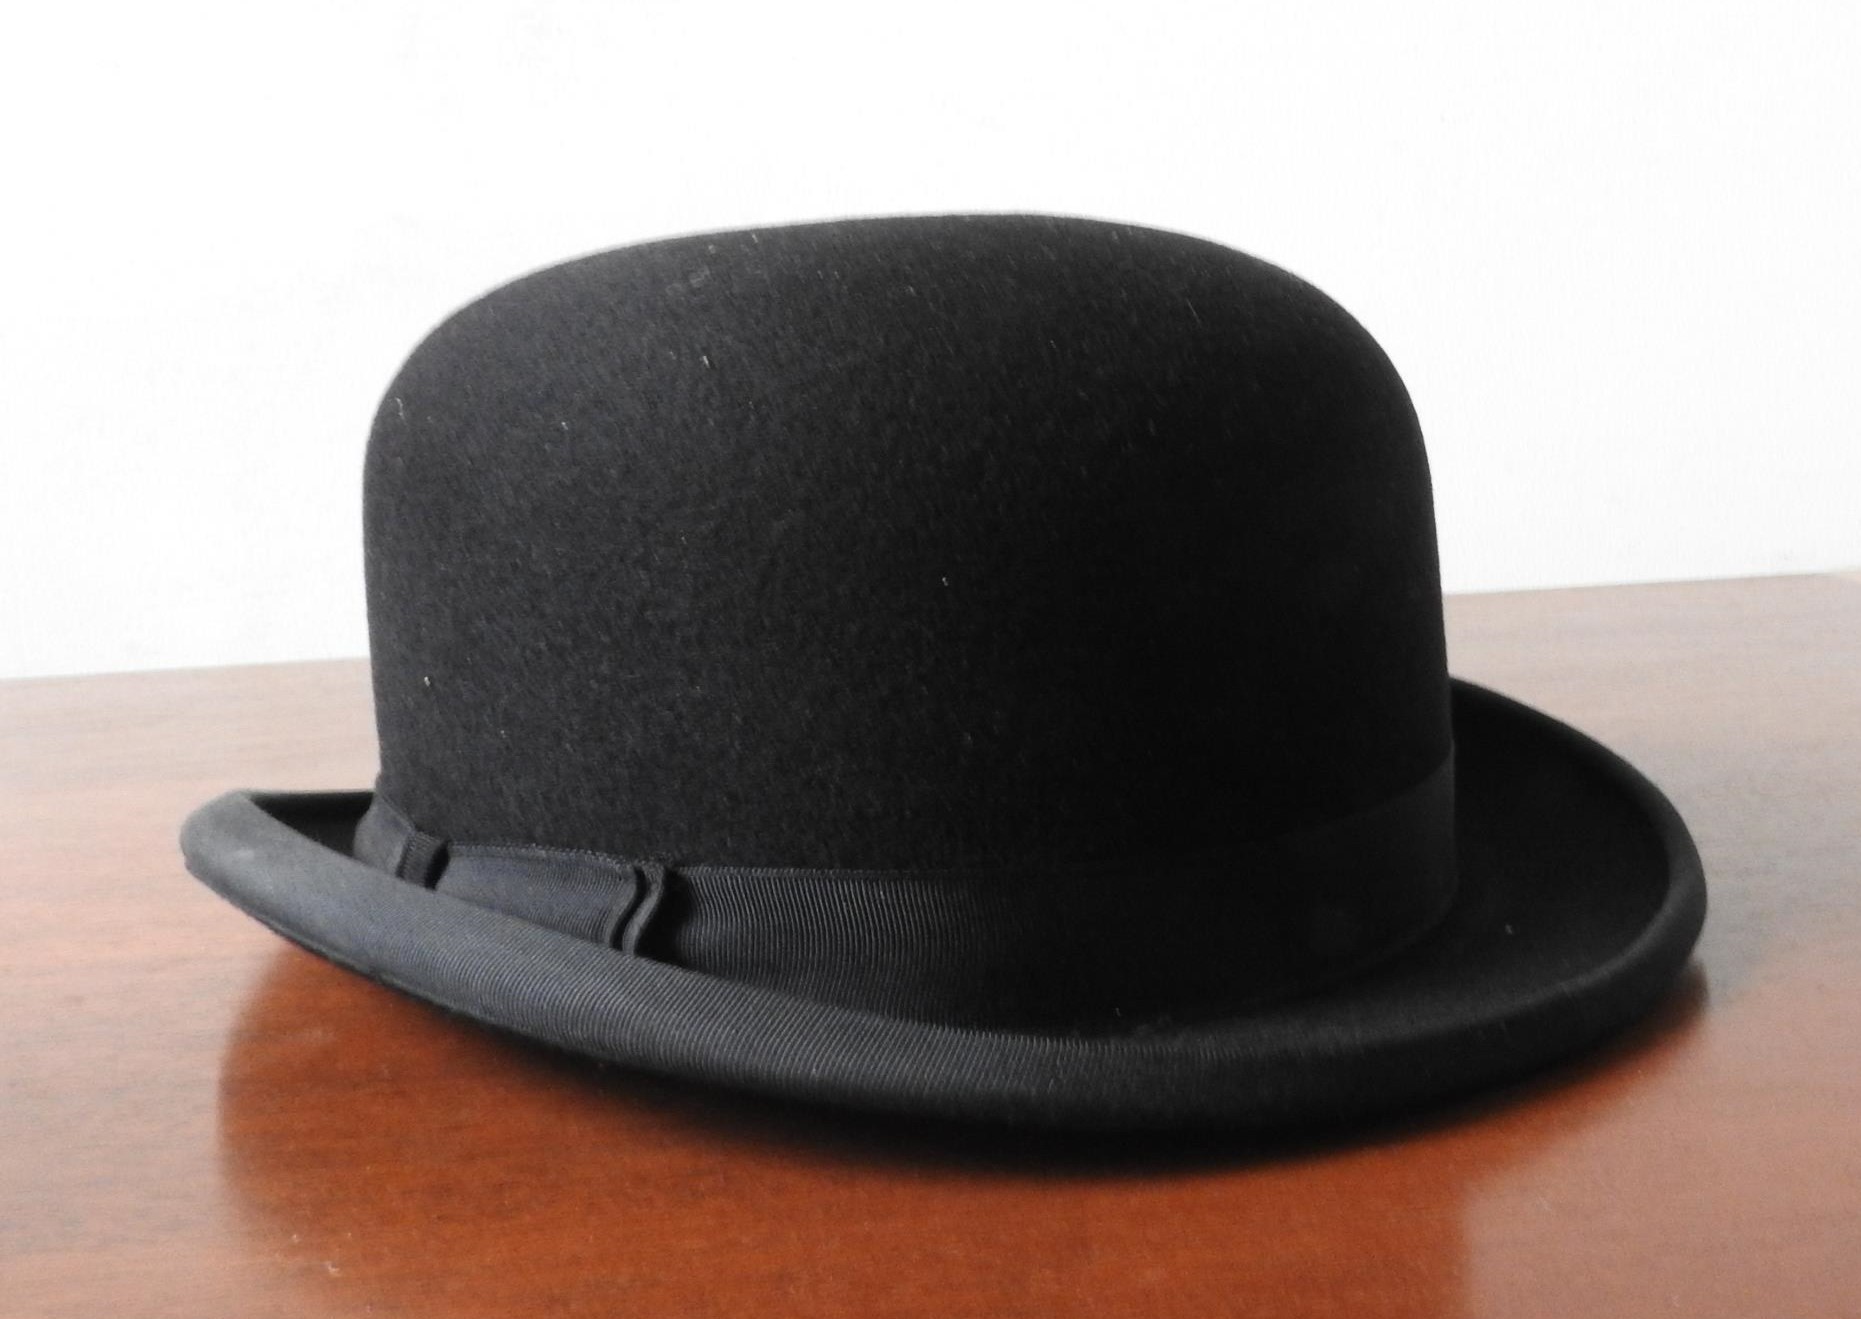 A CHRISTY'S OF LONDON BOWLER HAT, UK size 7 5/8, 62 cm